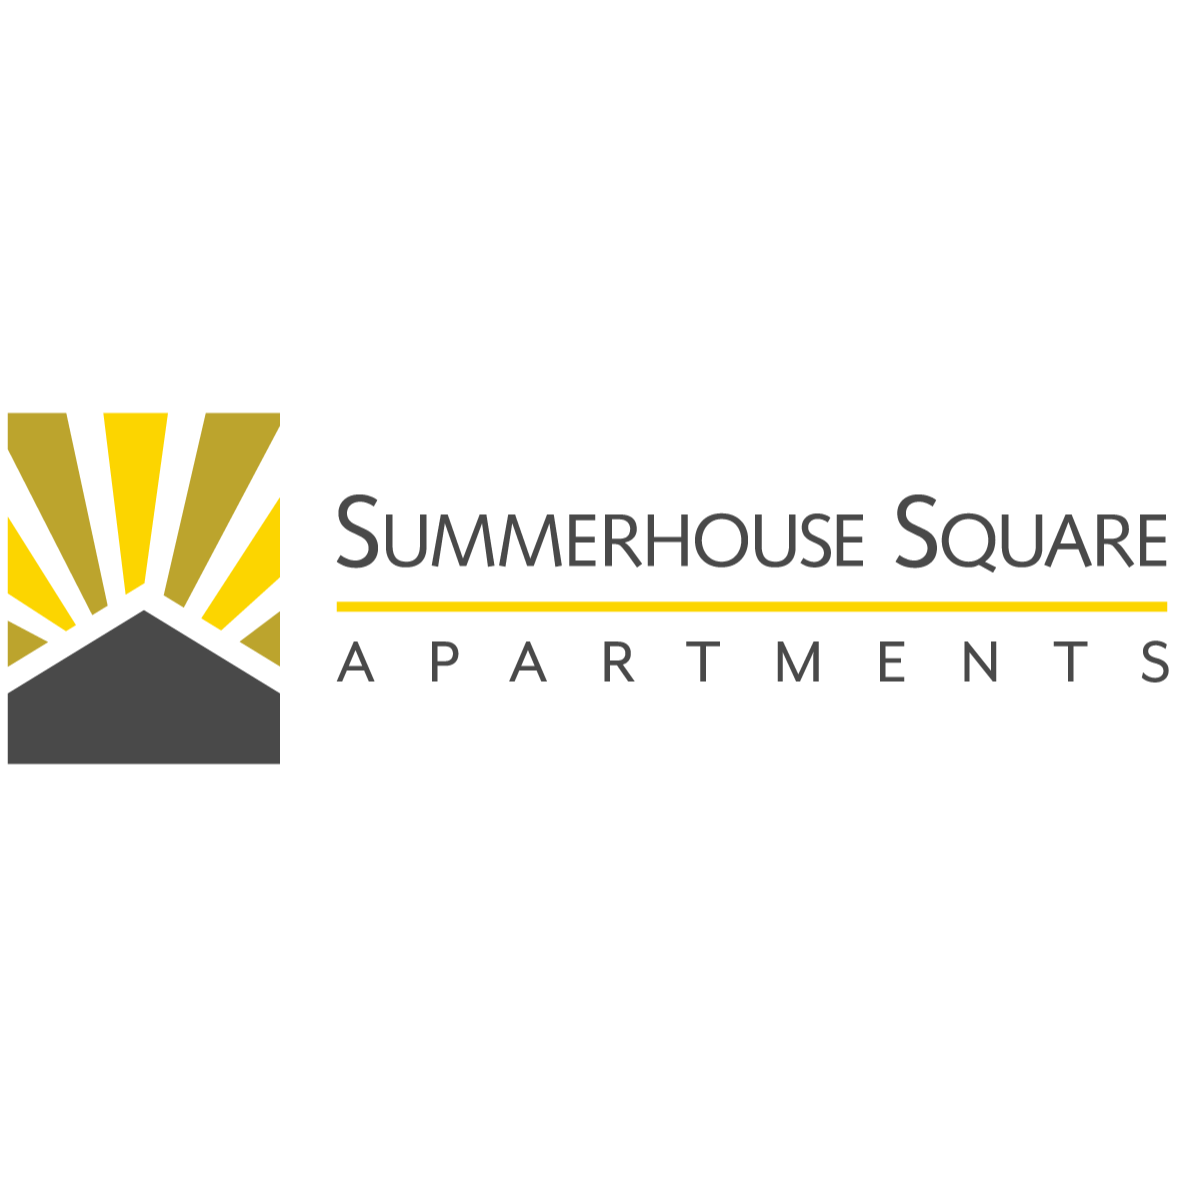 Summerhouse Square Apartments